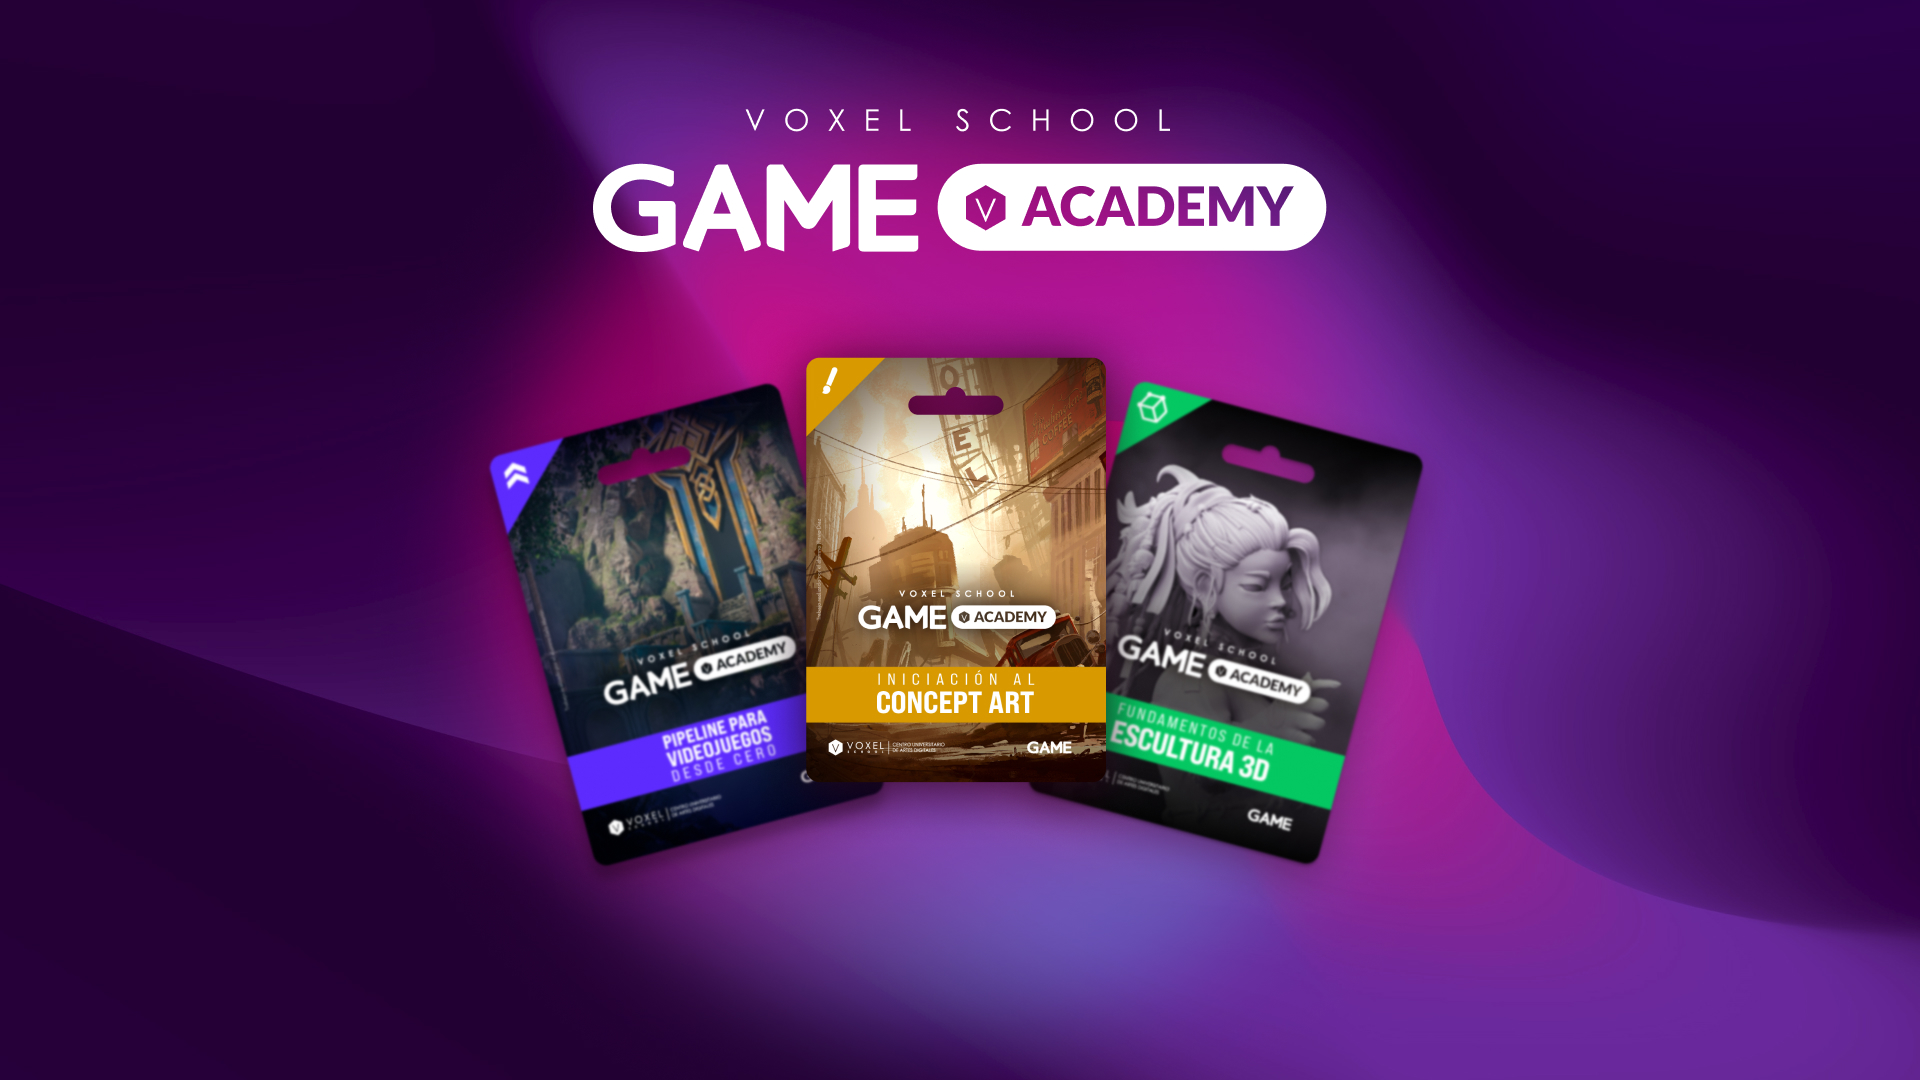 Voxel School GAME Academy